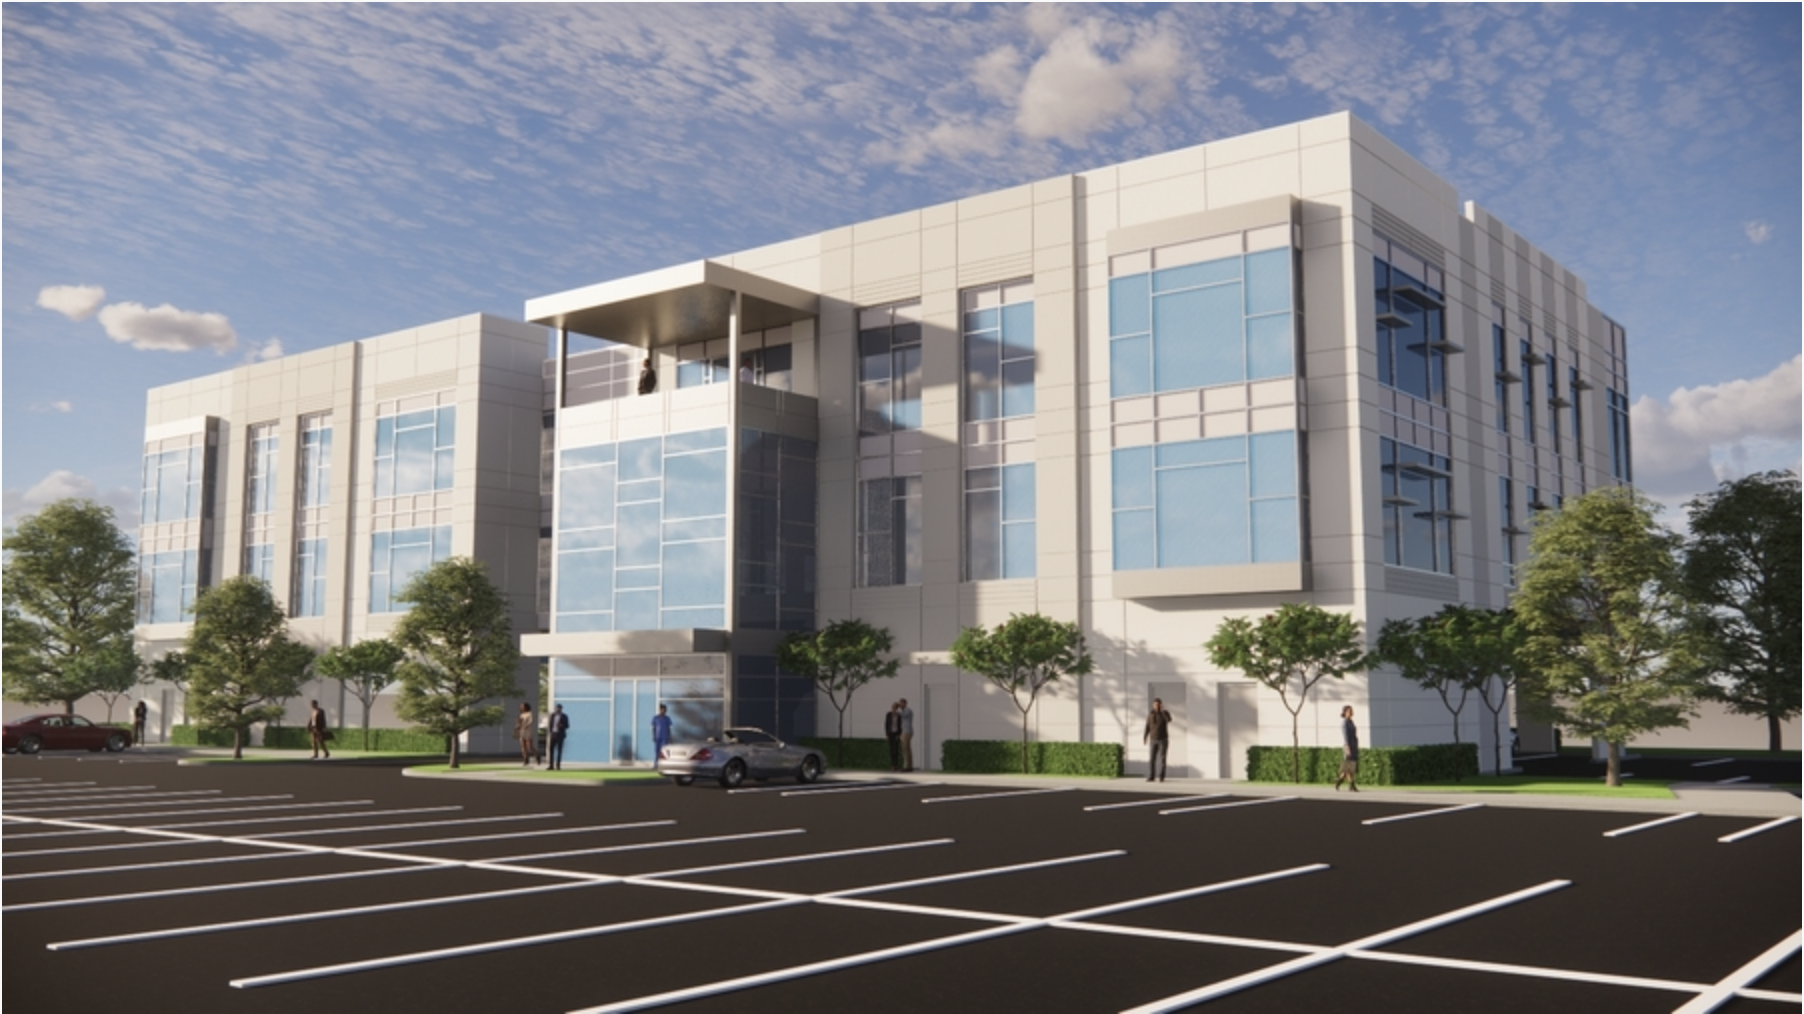 DL Harkins Construction, LLC starts new Medical Office Building